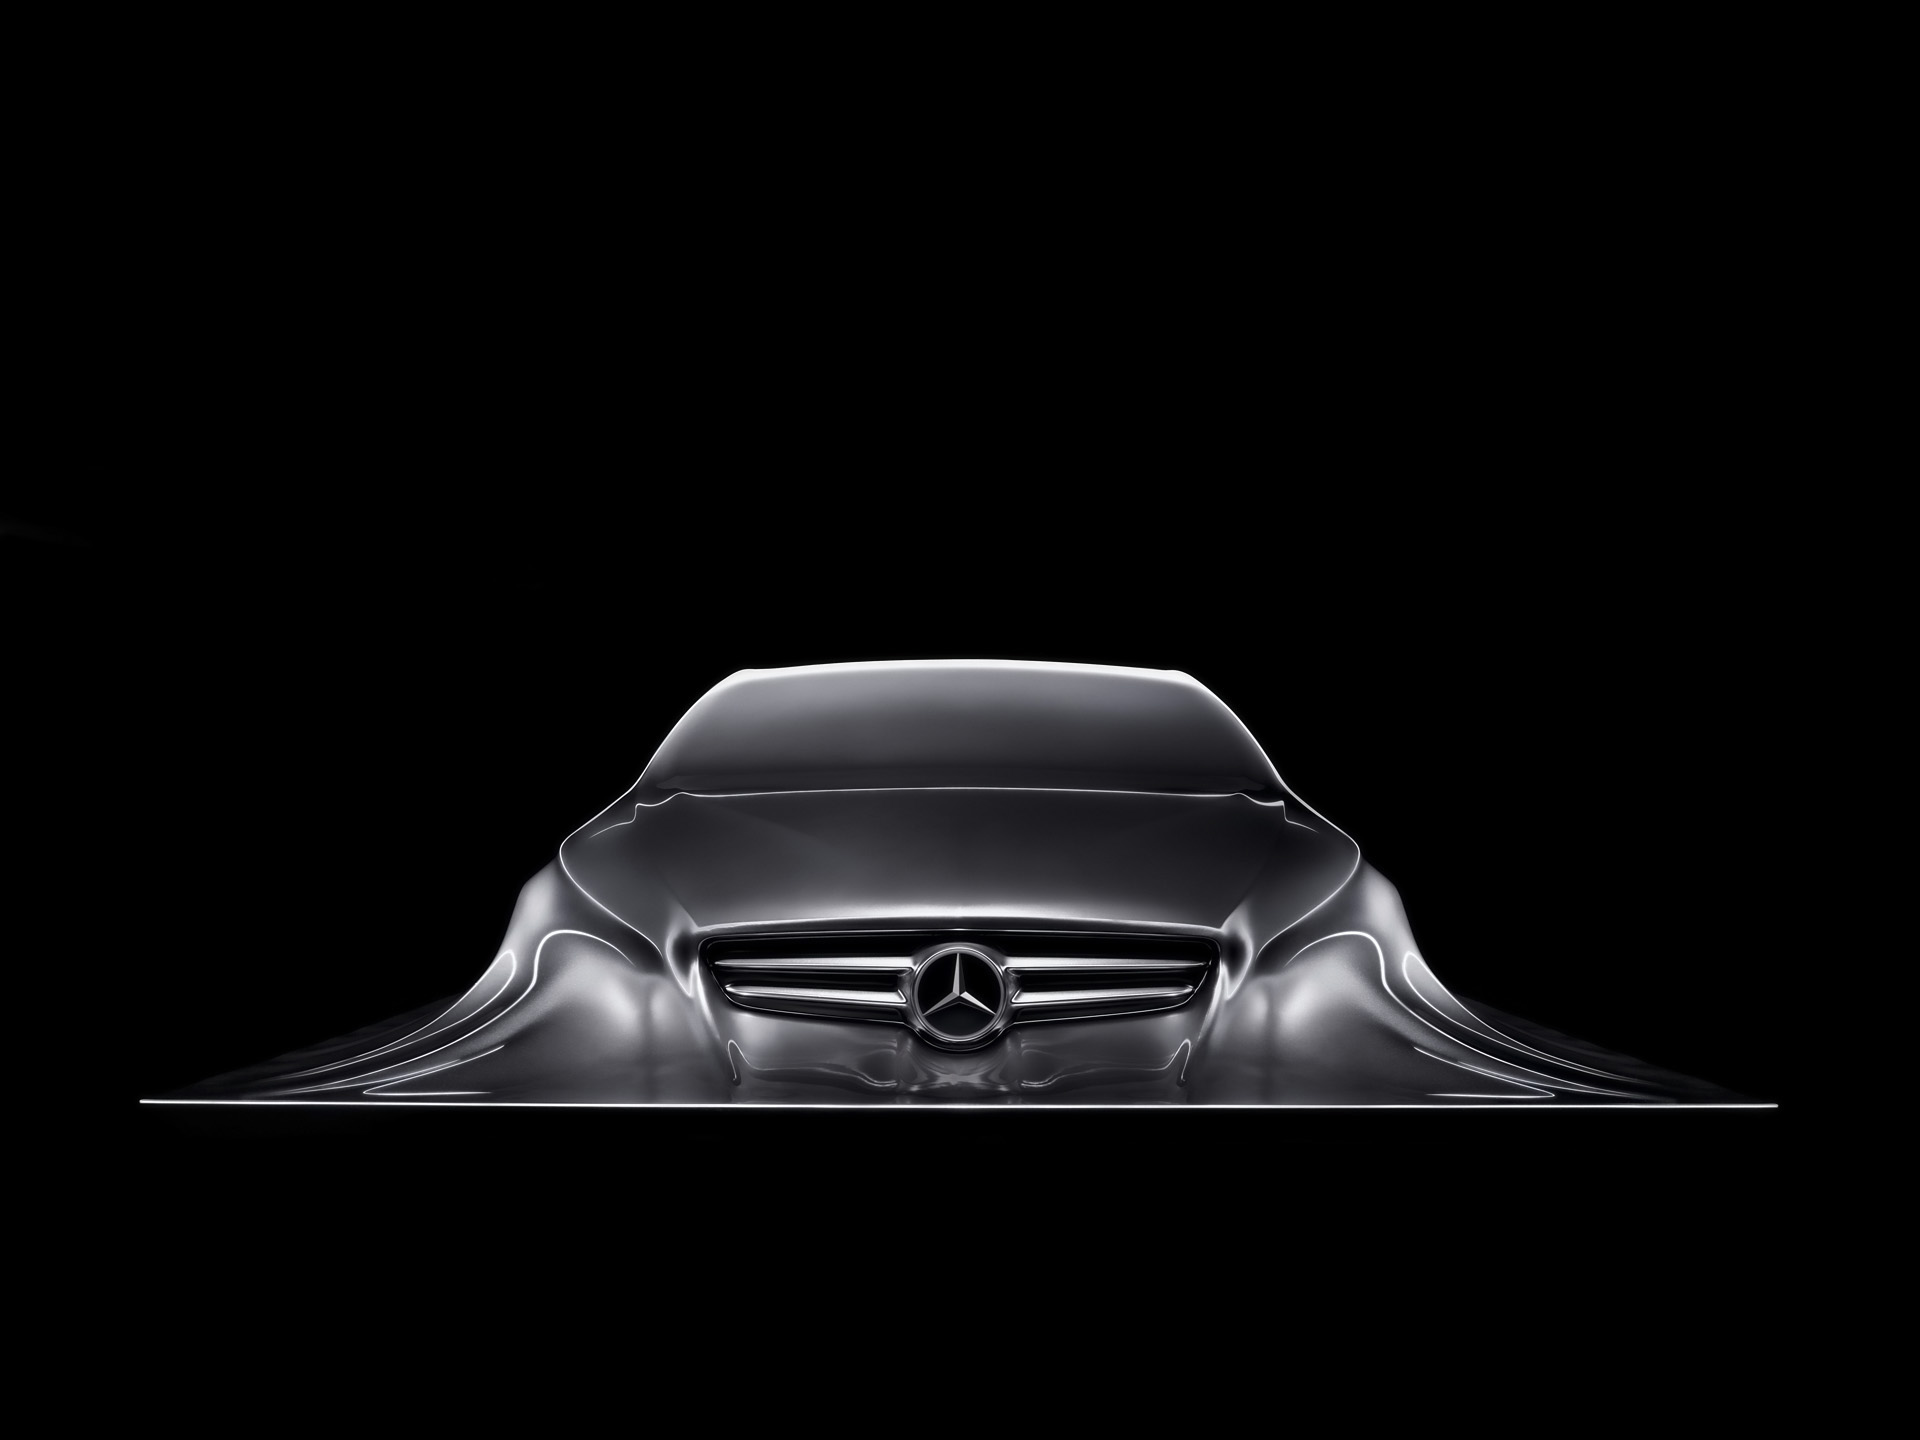 Mercedes Benz Design Sculpture Desktop Pc And Mac Wallpaper